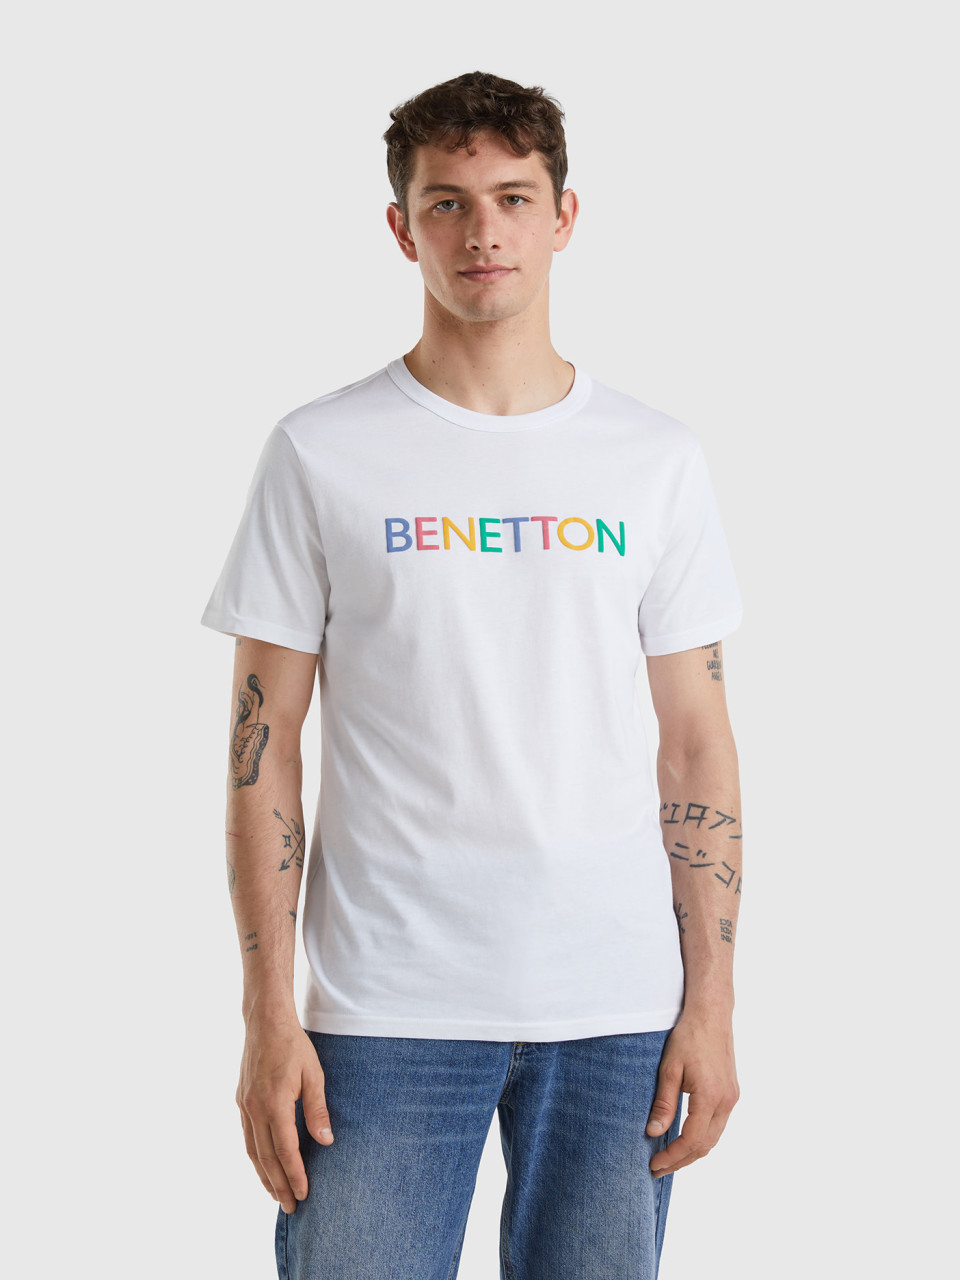 Benetton, Camiseta Blanca De Algodón Orgánico Con Logotipo Multicolor, Blanco, Hombre